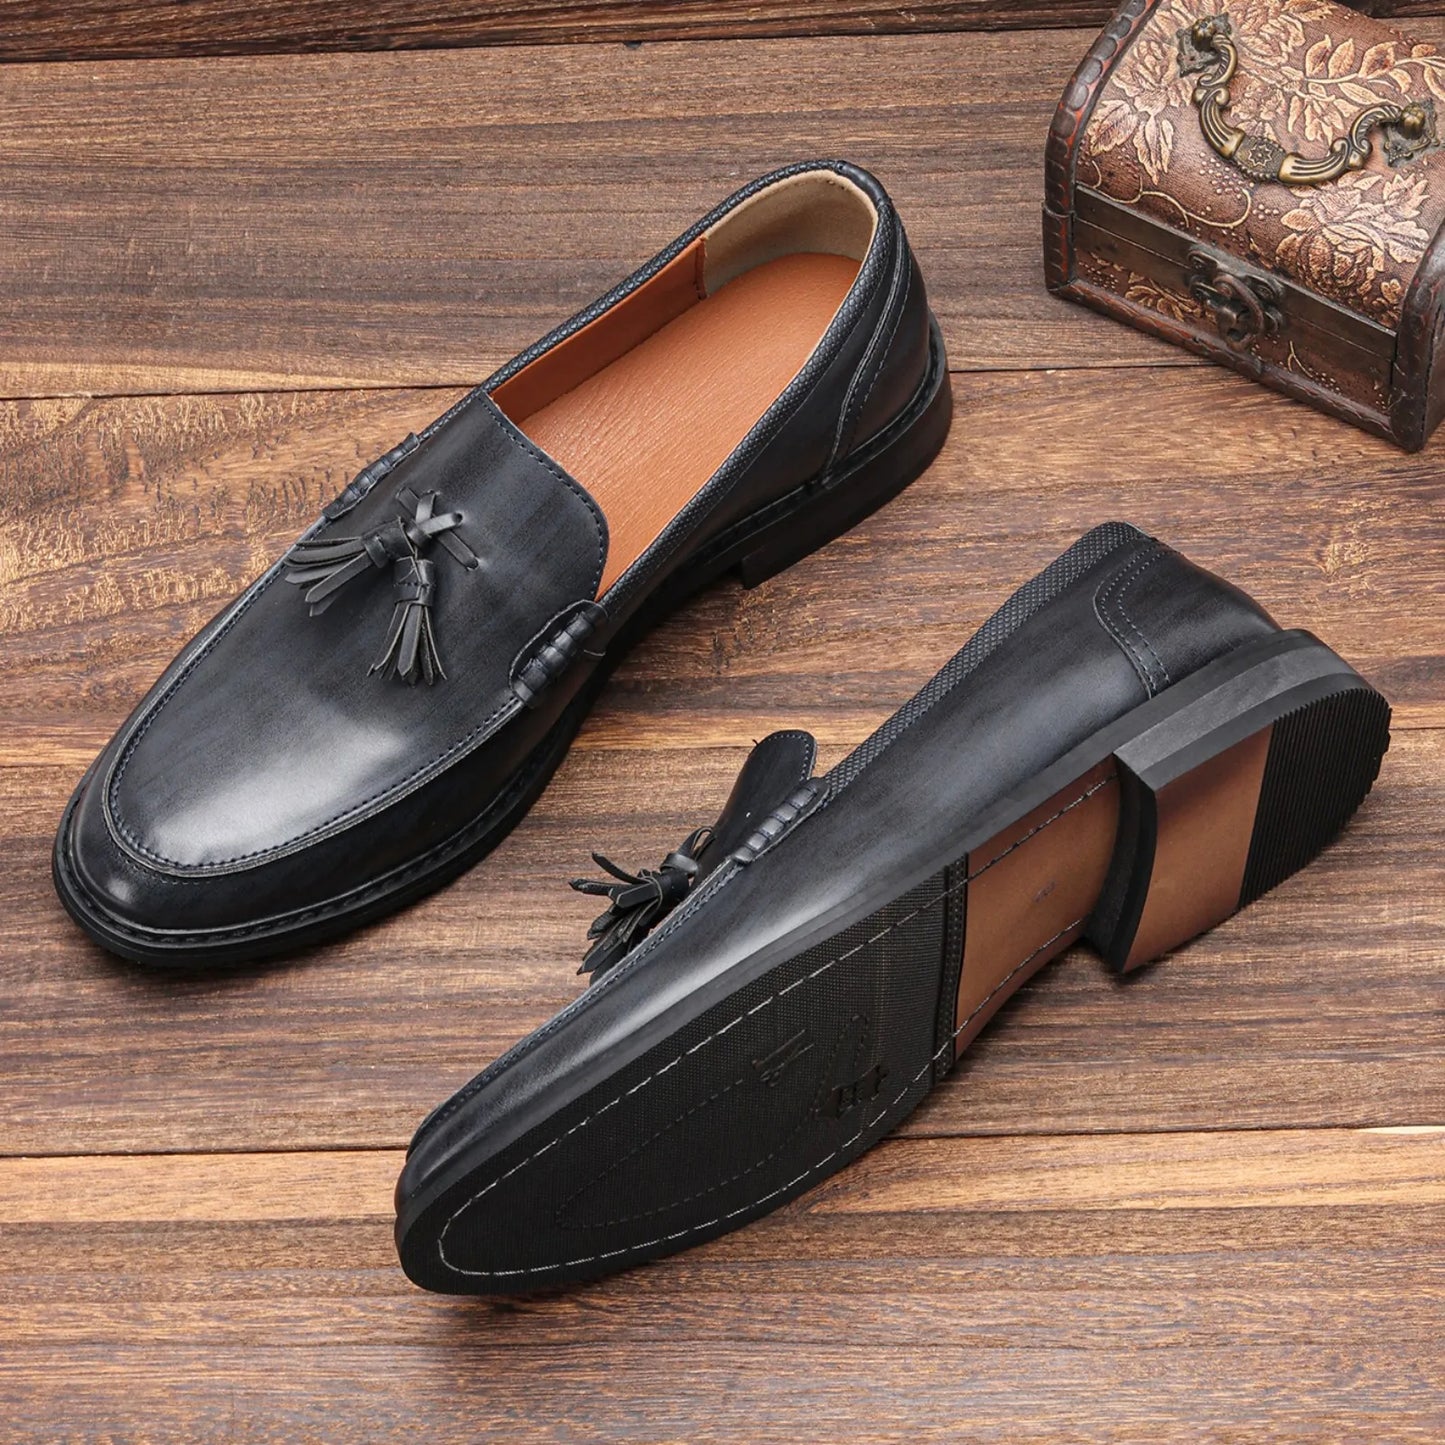 7-12 Assels Dress Shoes Man Business Stylish Comfortable Gentleman'S Formal Shoes Men #Al703